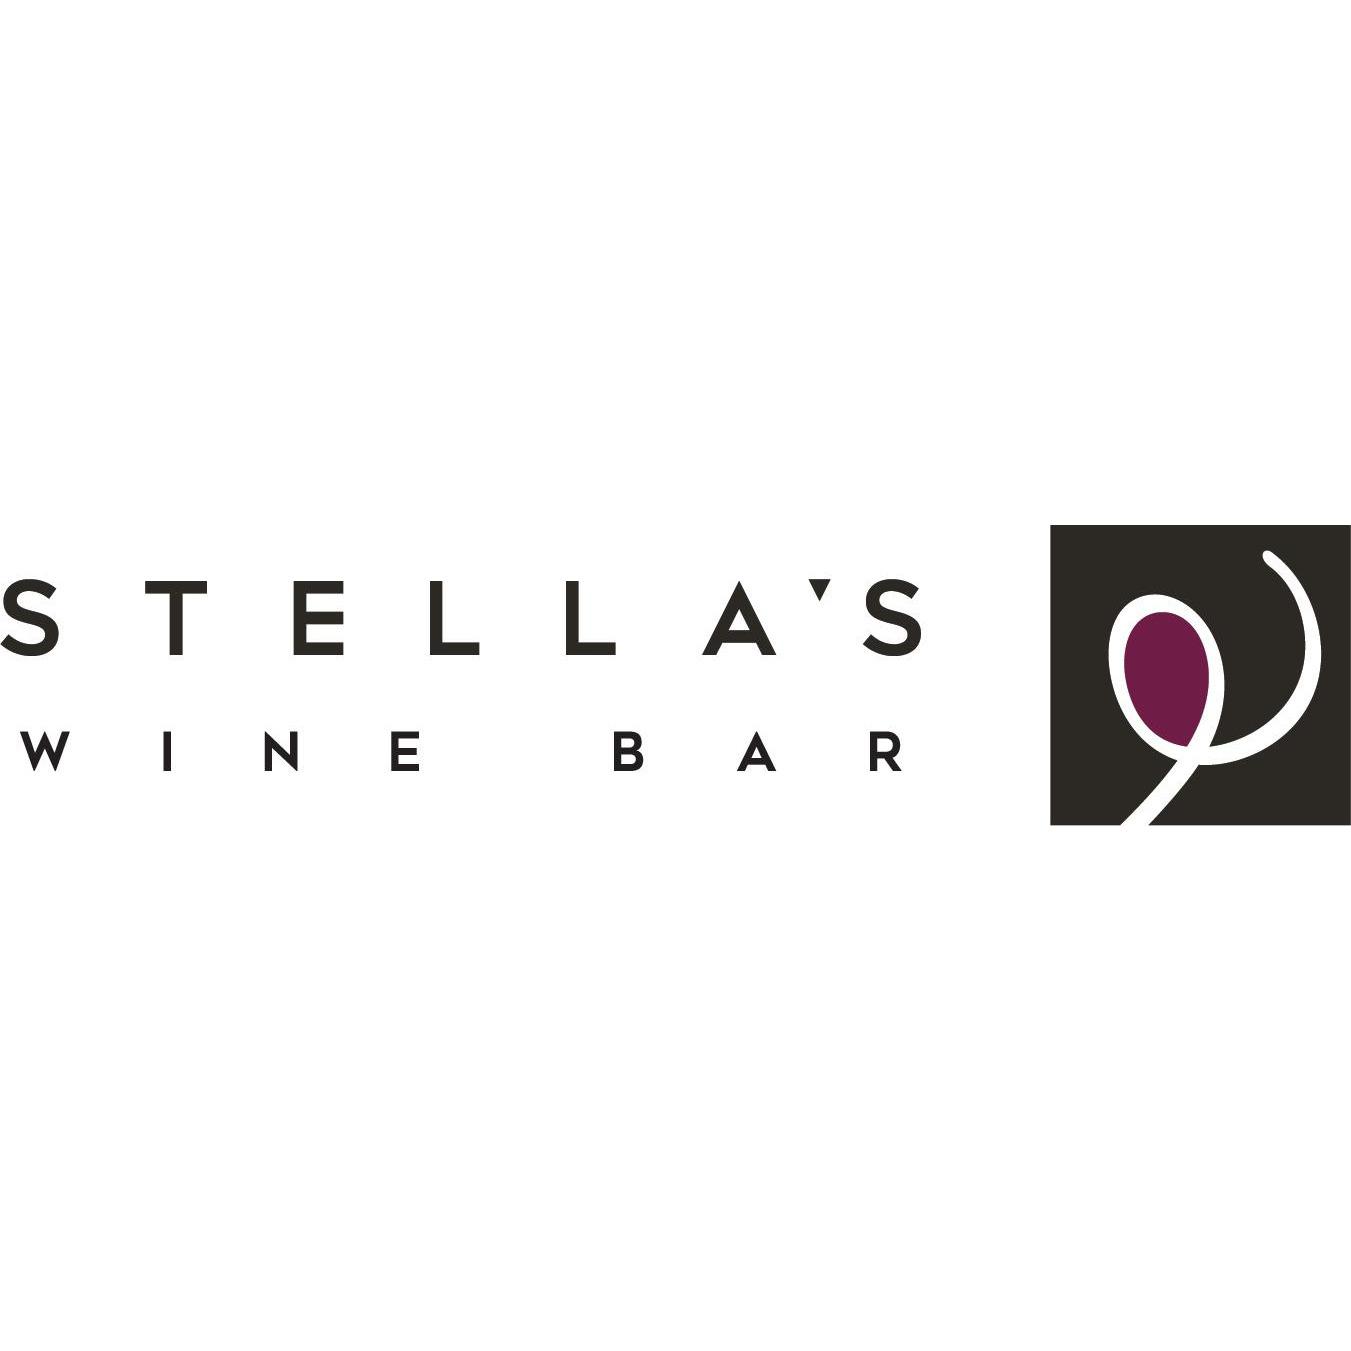 Stella's Wine Bar